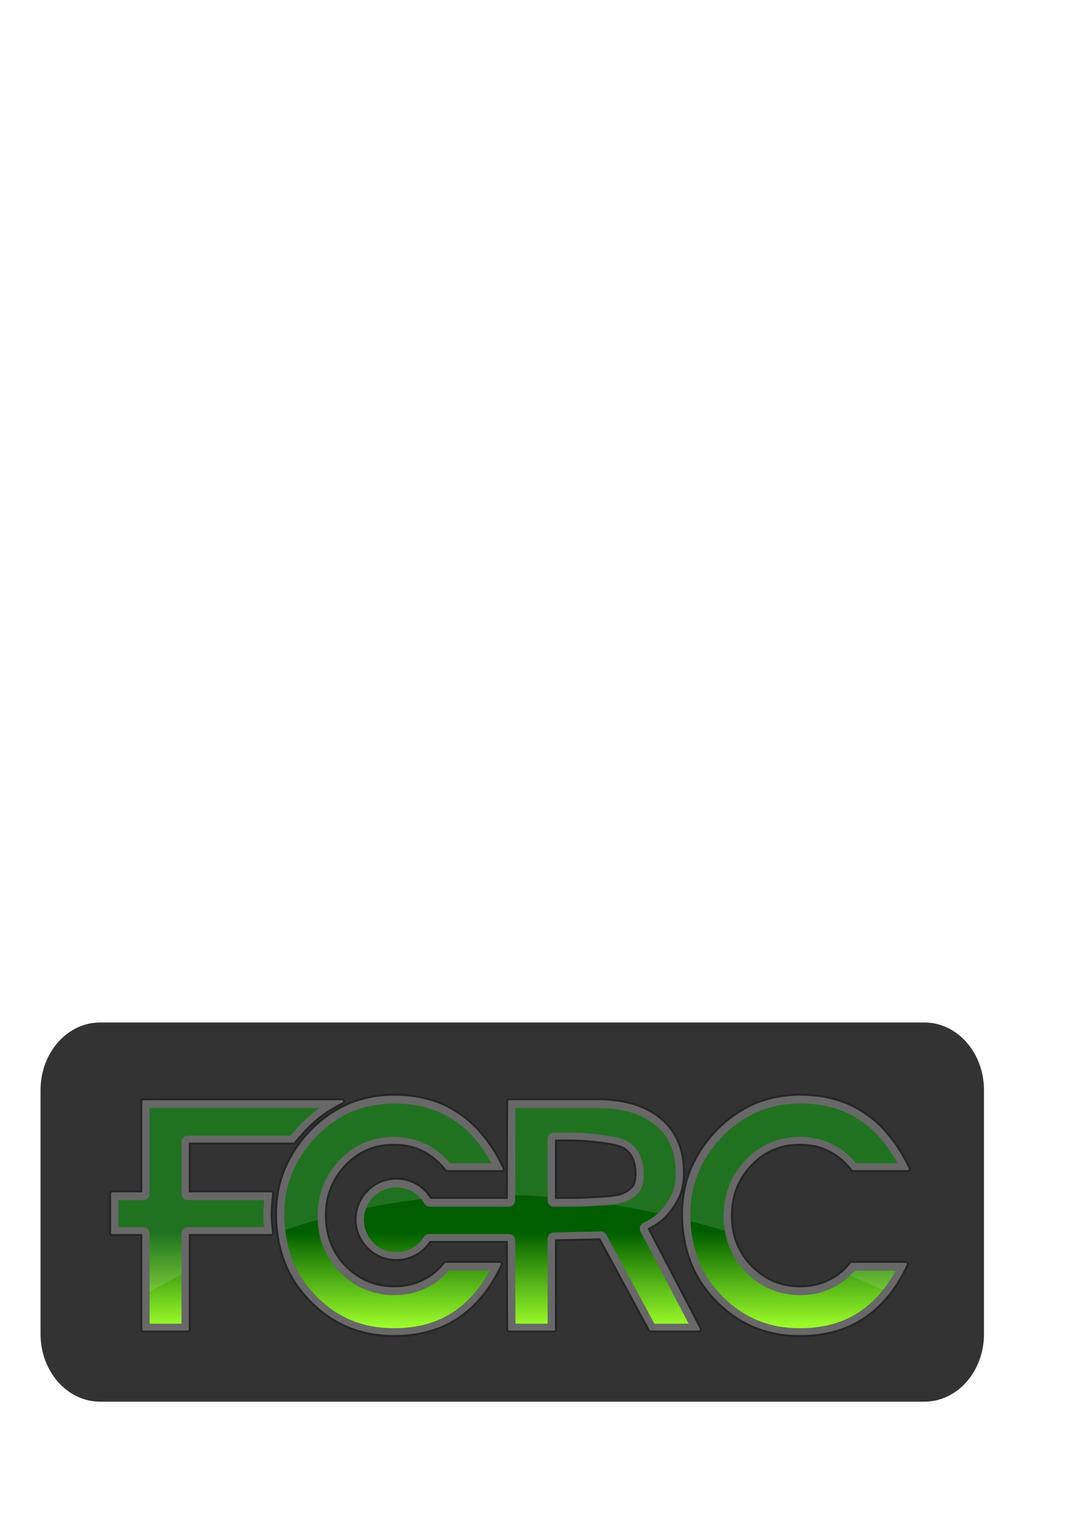 FCRC logo text 3 png transparent